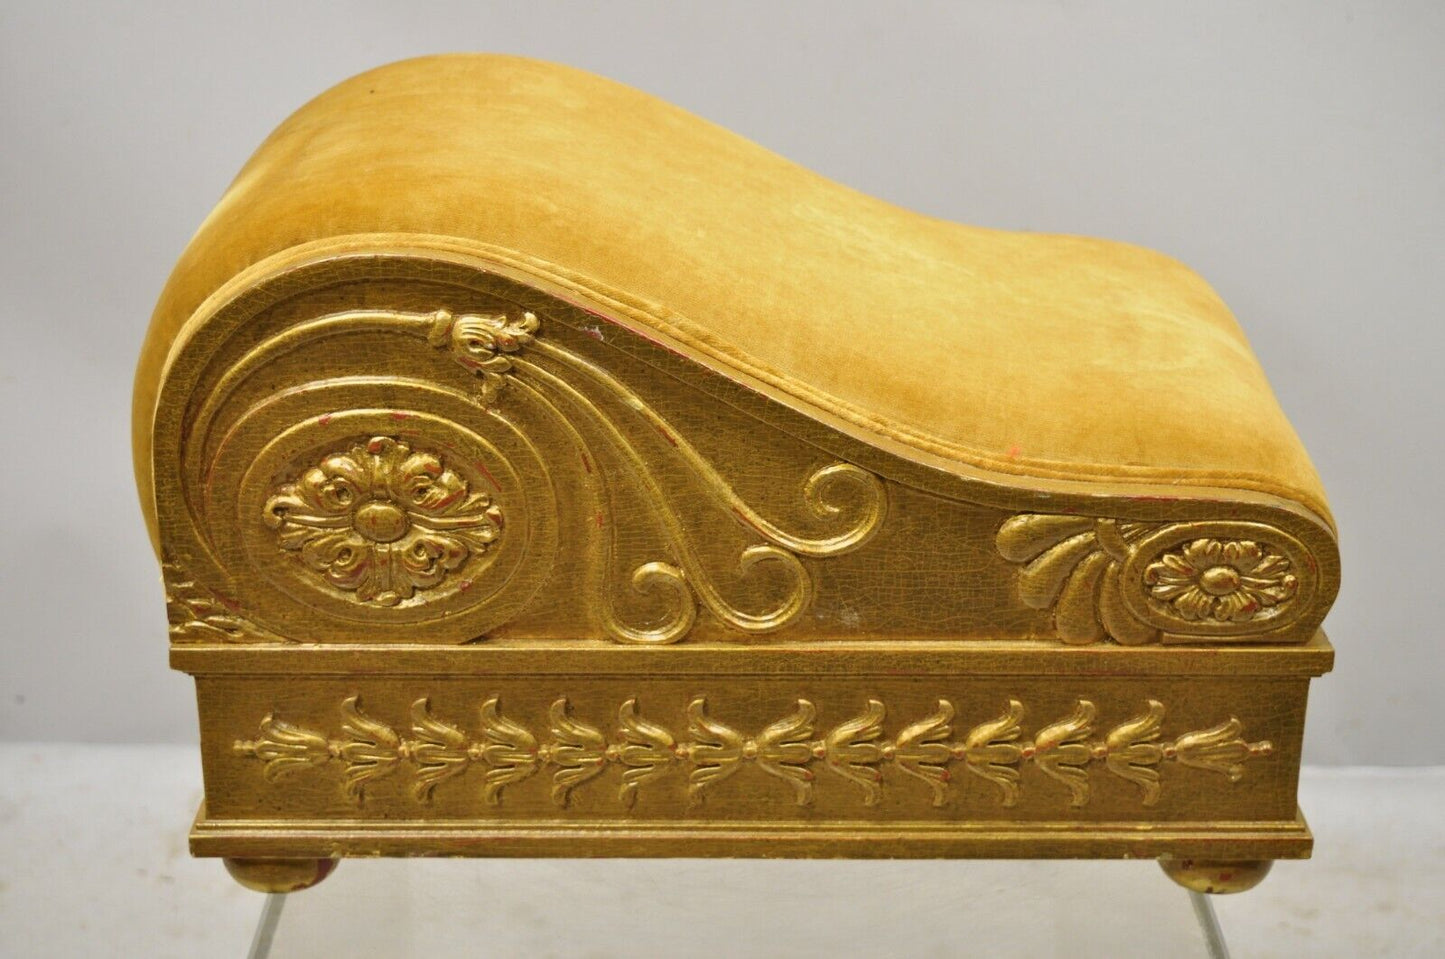 Vintage Italian Empire Style Gold Giltwood Swedish Gout Stool Footstool Ottoman